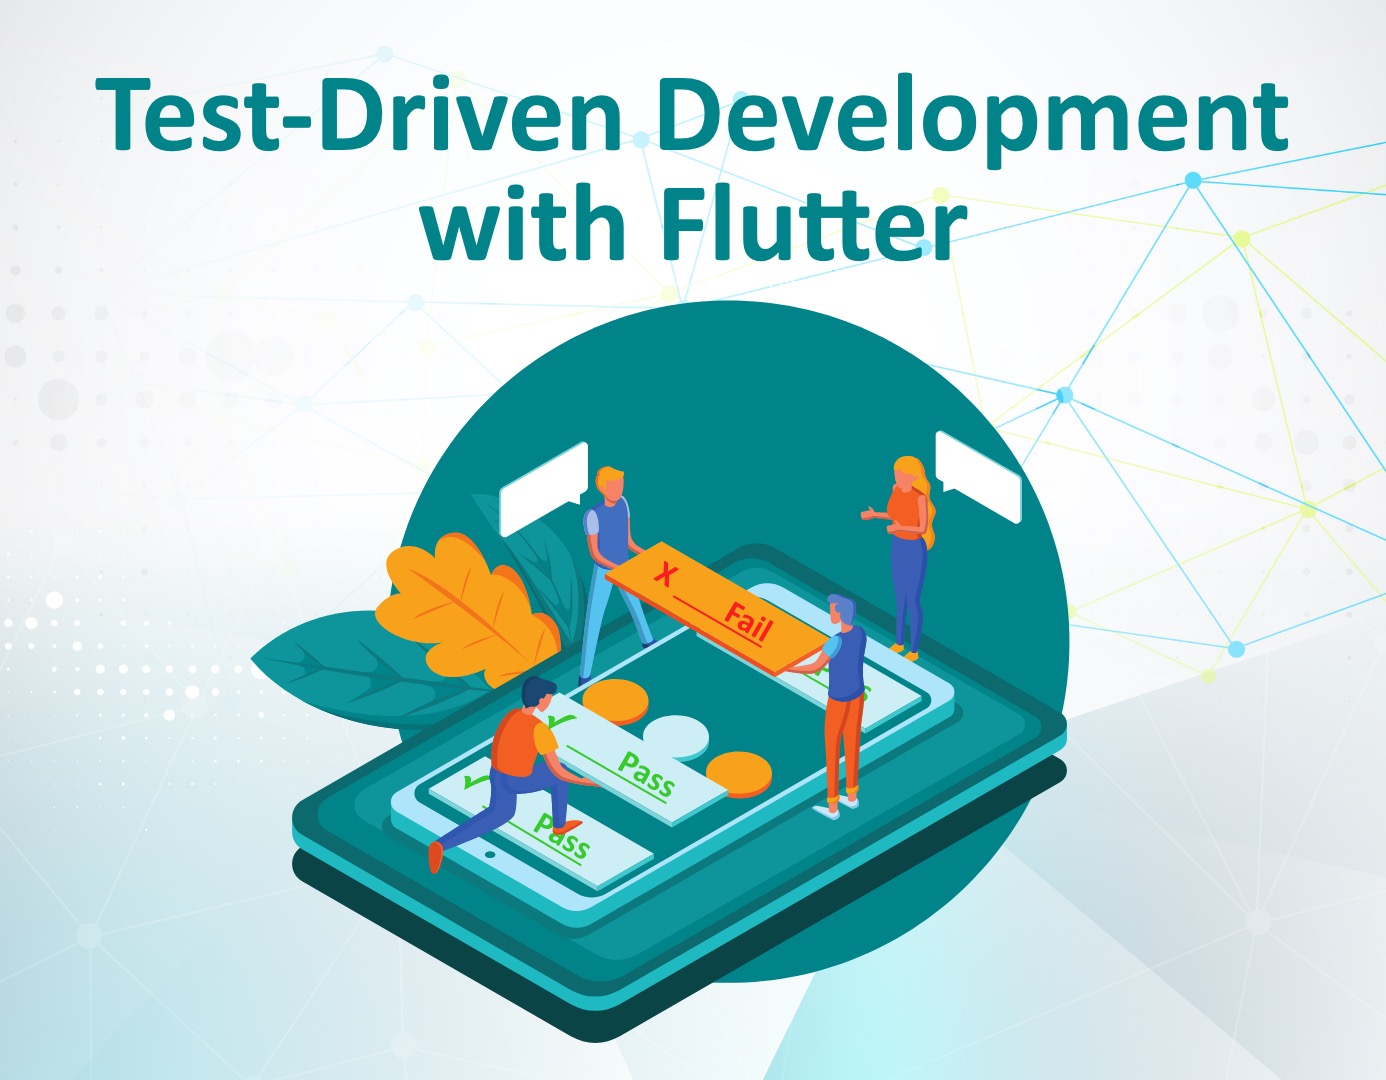 Flutter TDD Blog Thumbnail: Illustration depicting Test-Driven Development using Flutter, including code development, testing and iterative refinement.